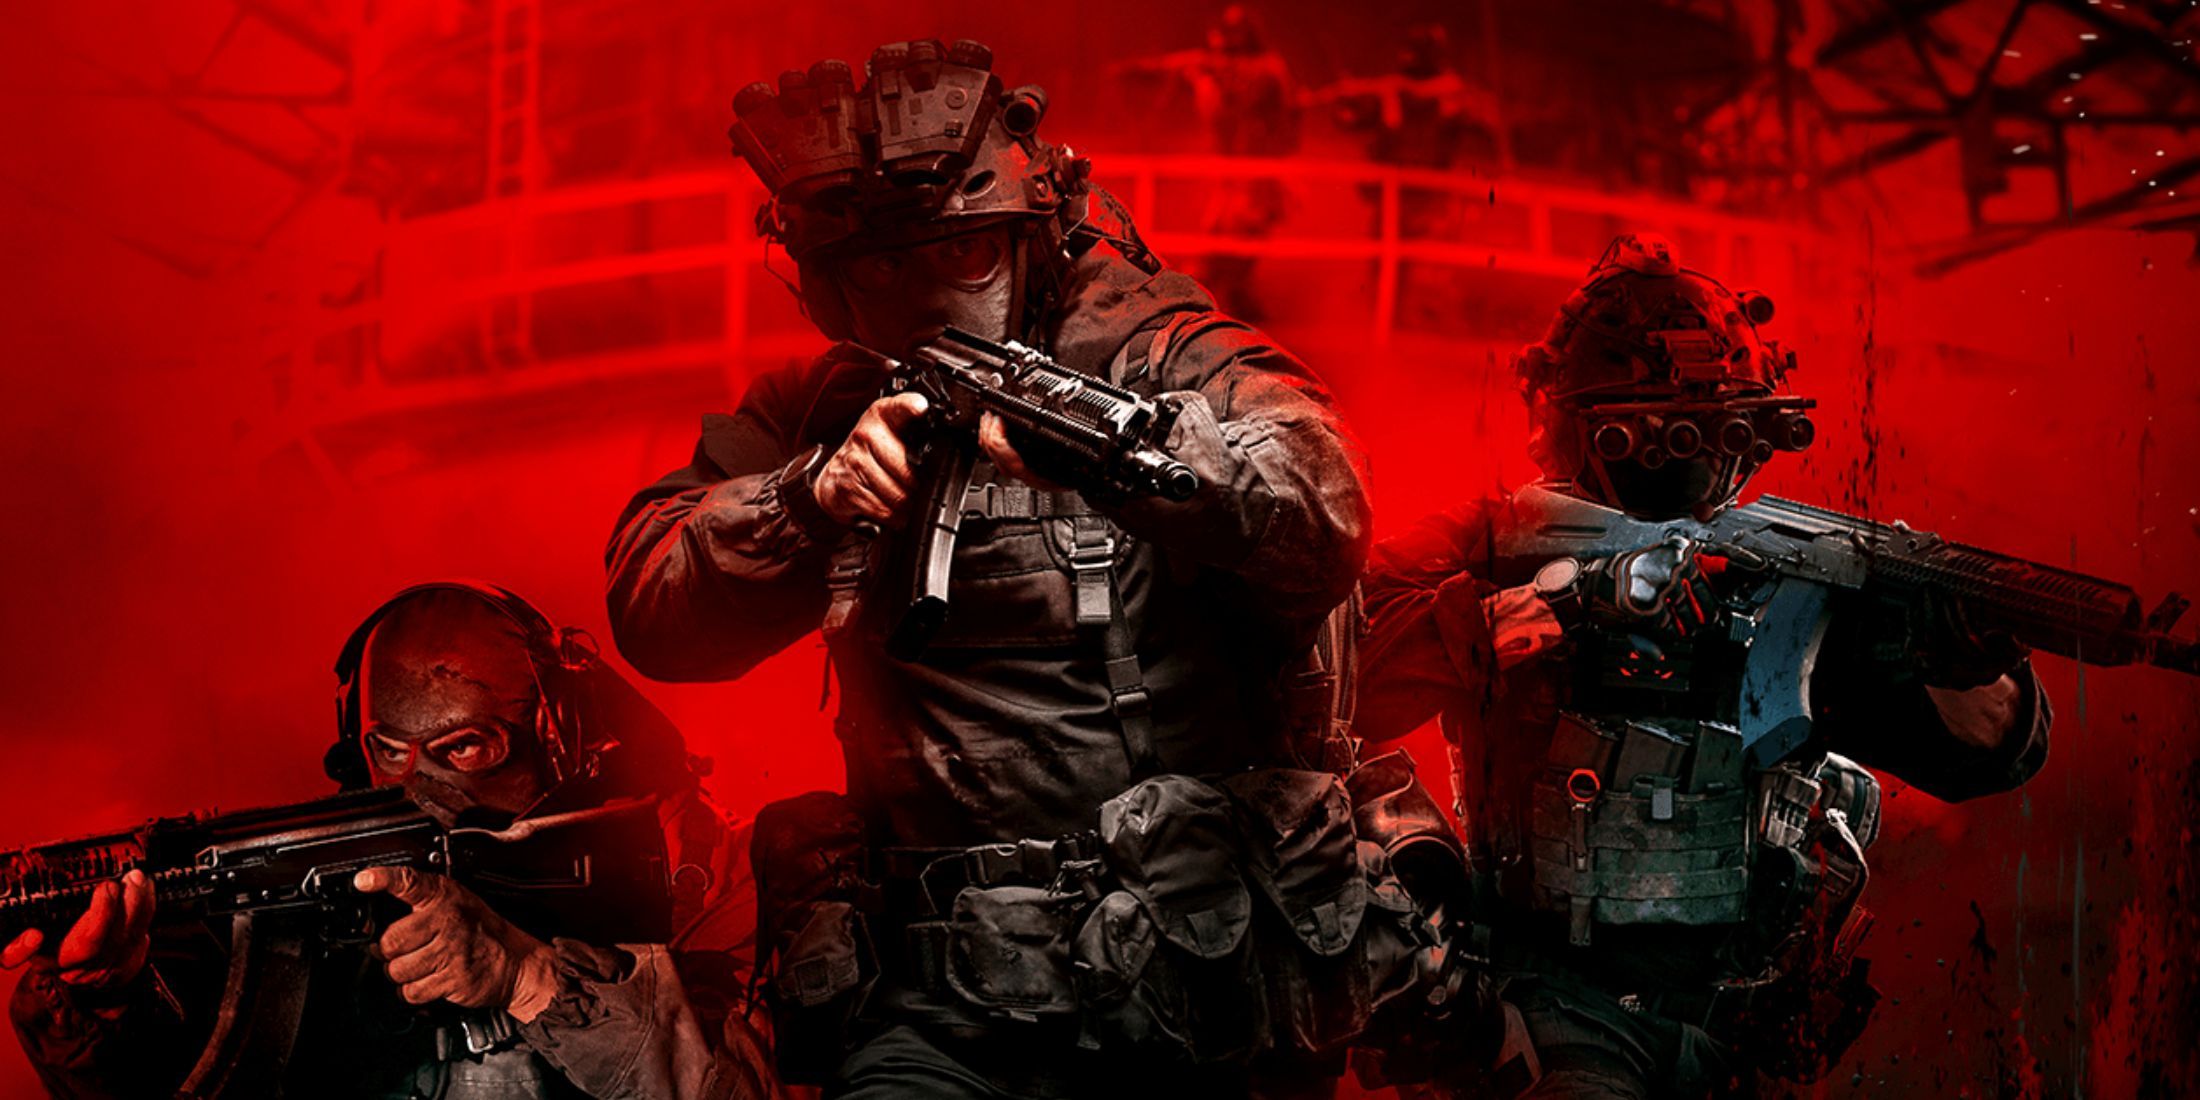 Soldiers holding guns in key art for Modern Warfare 3